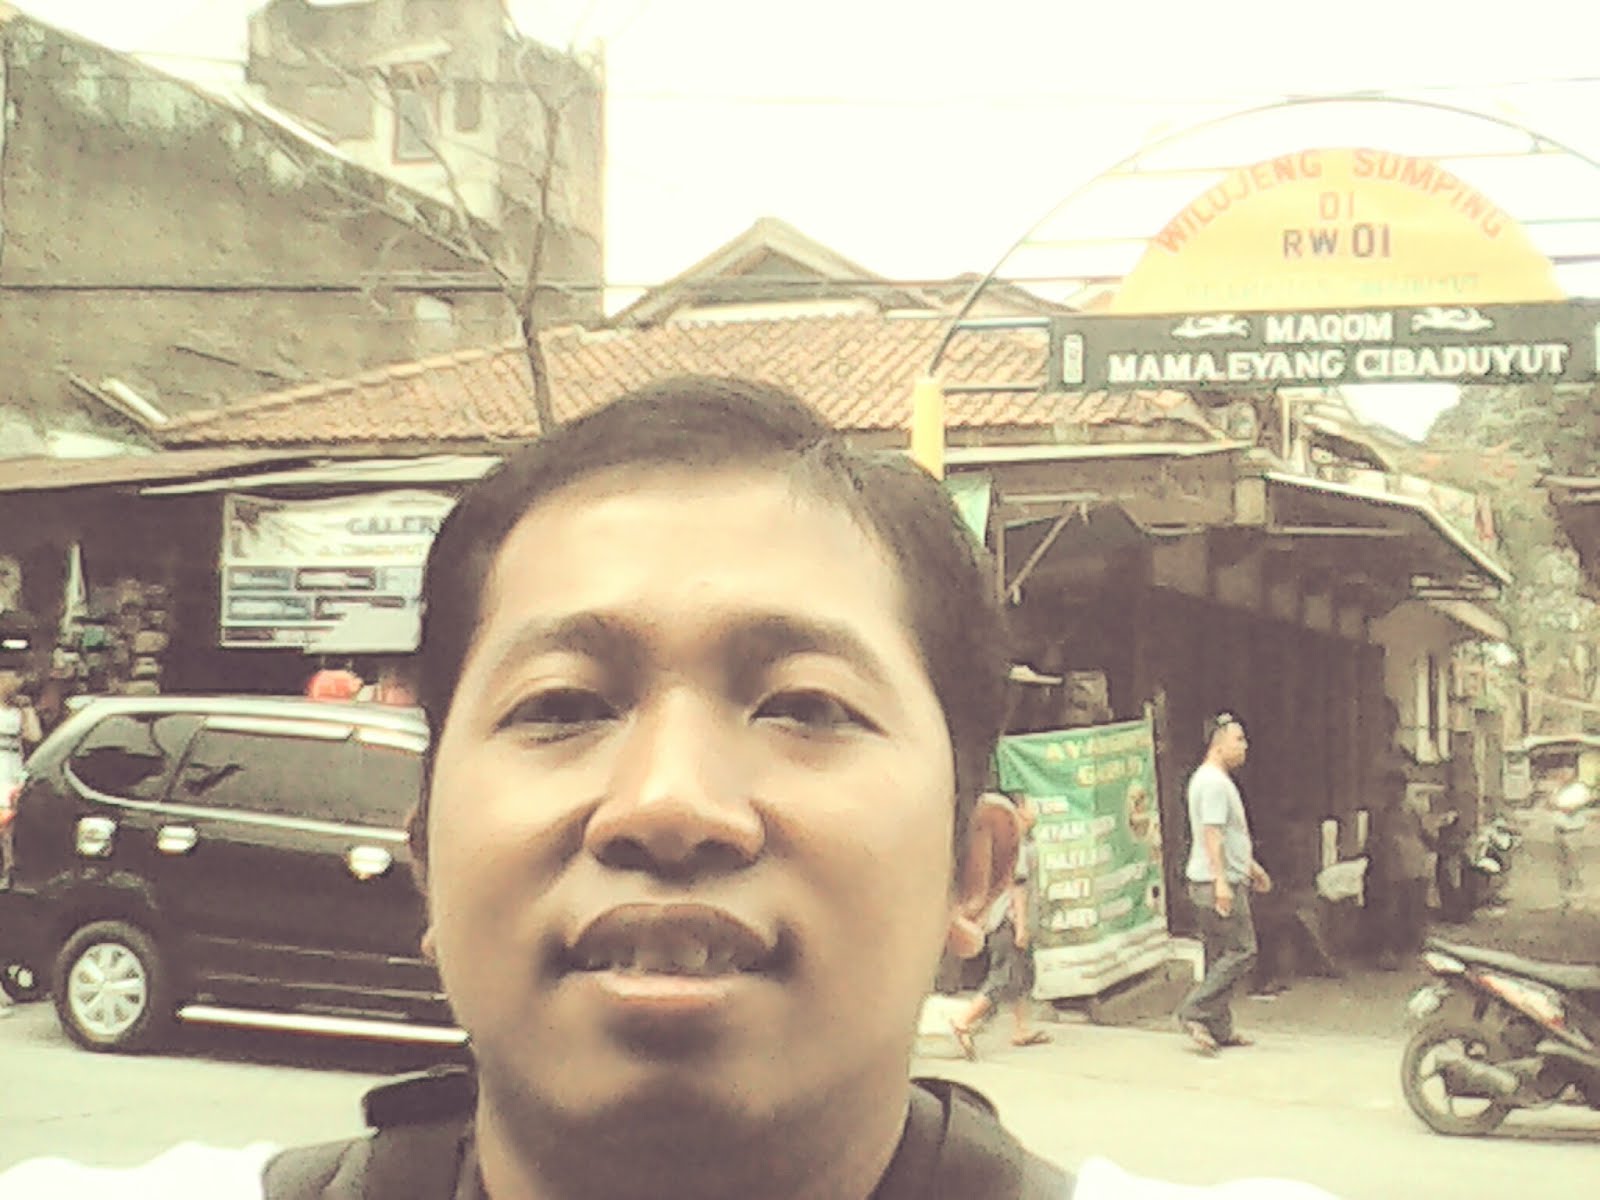 Cibaduyut, Jawa Barat